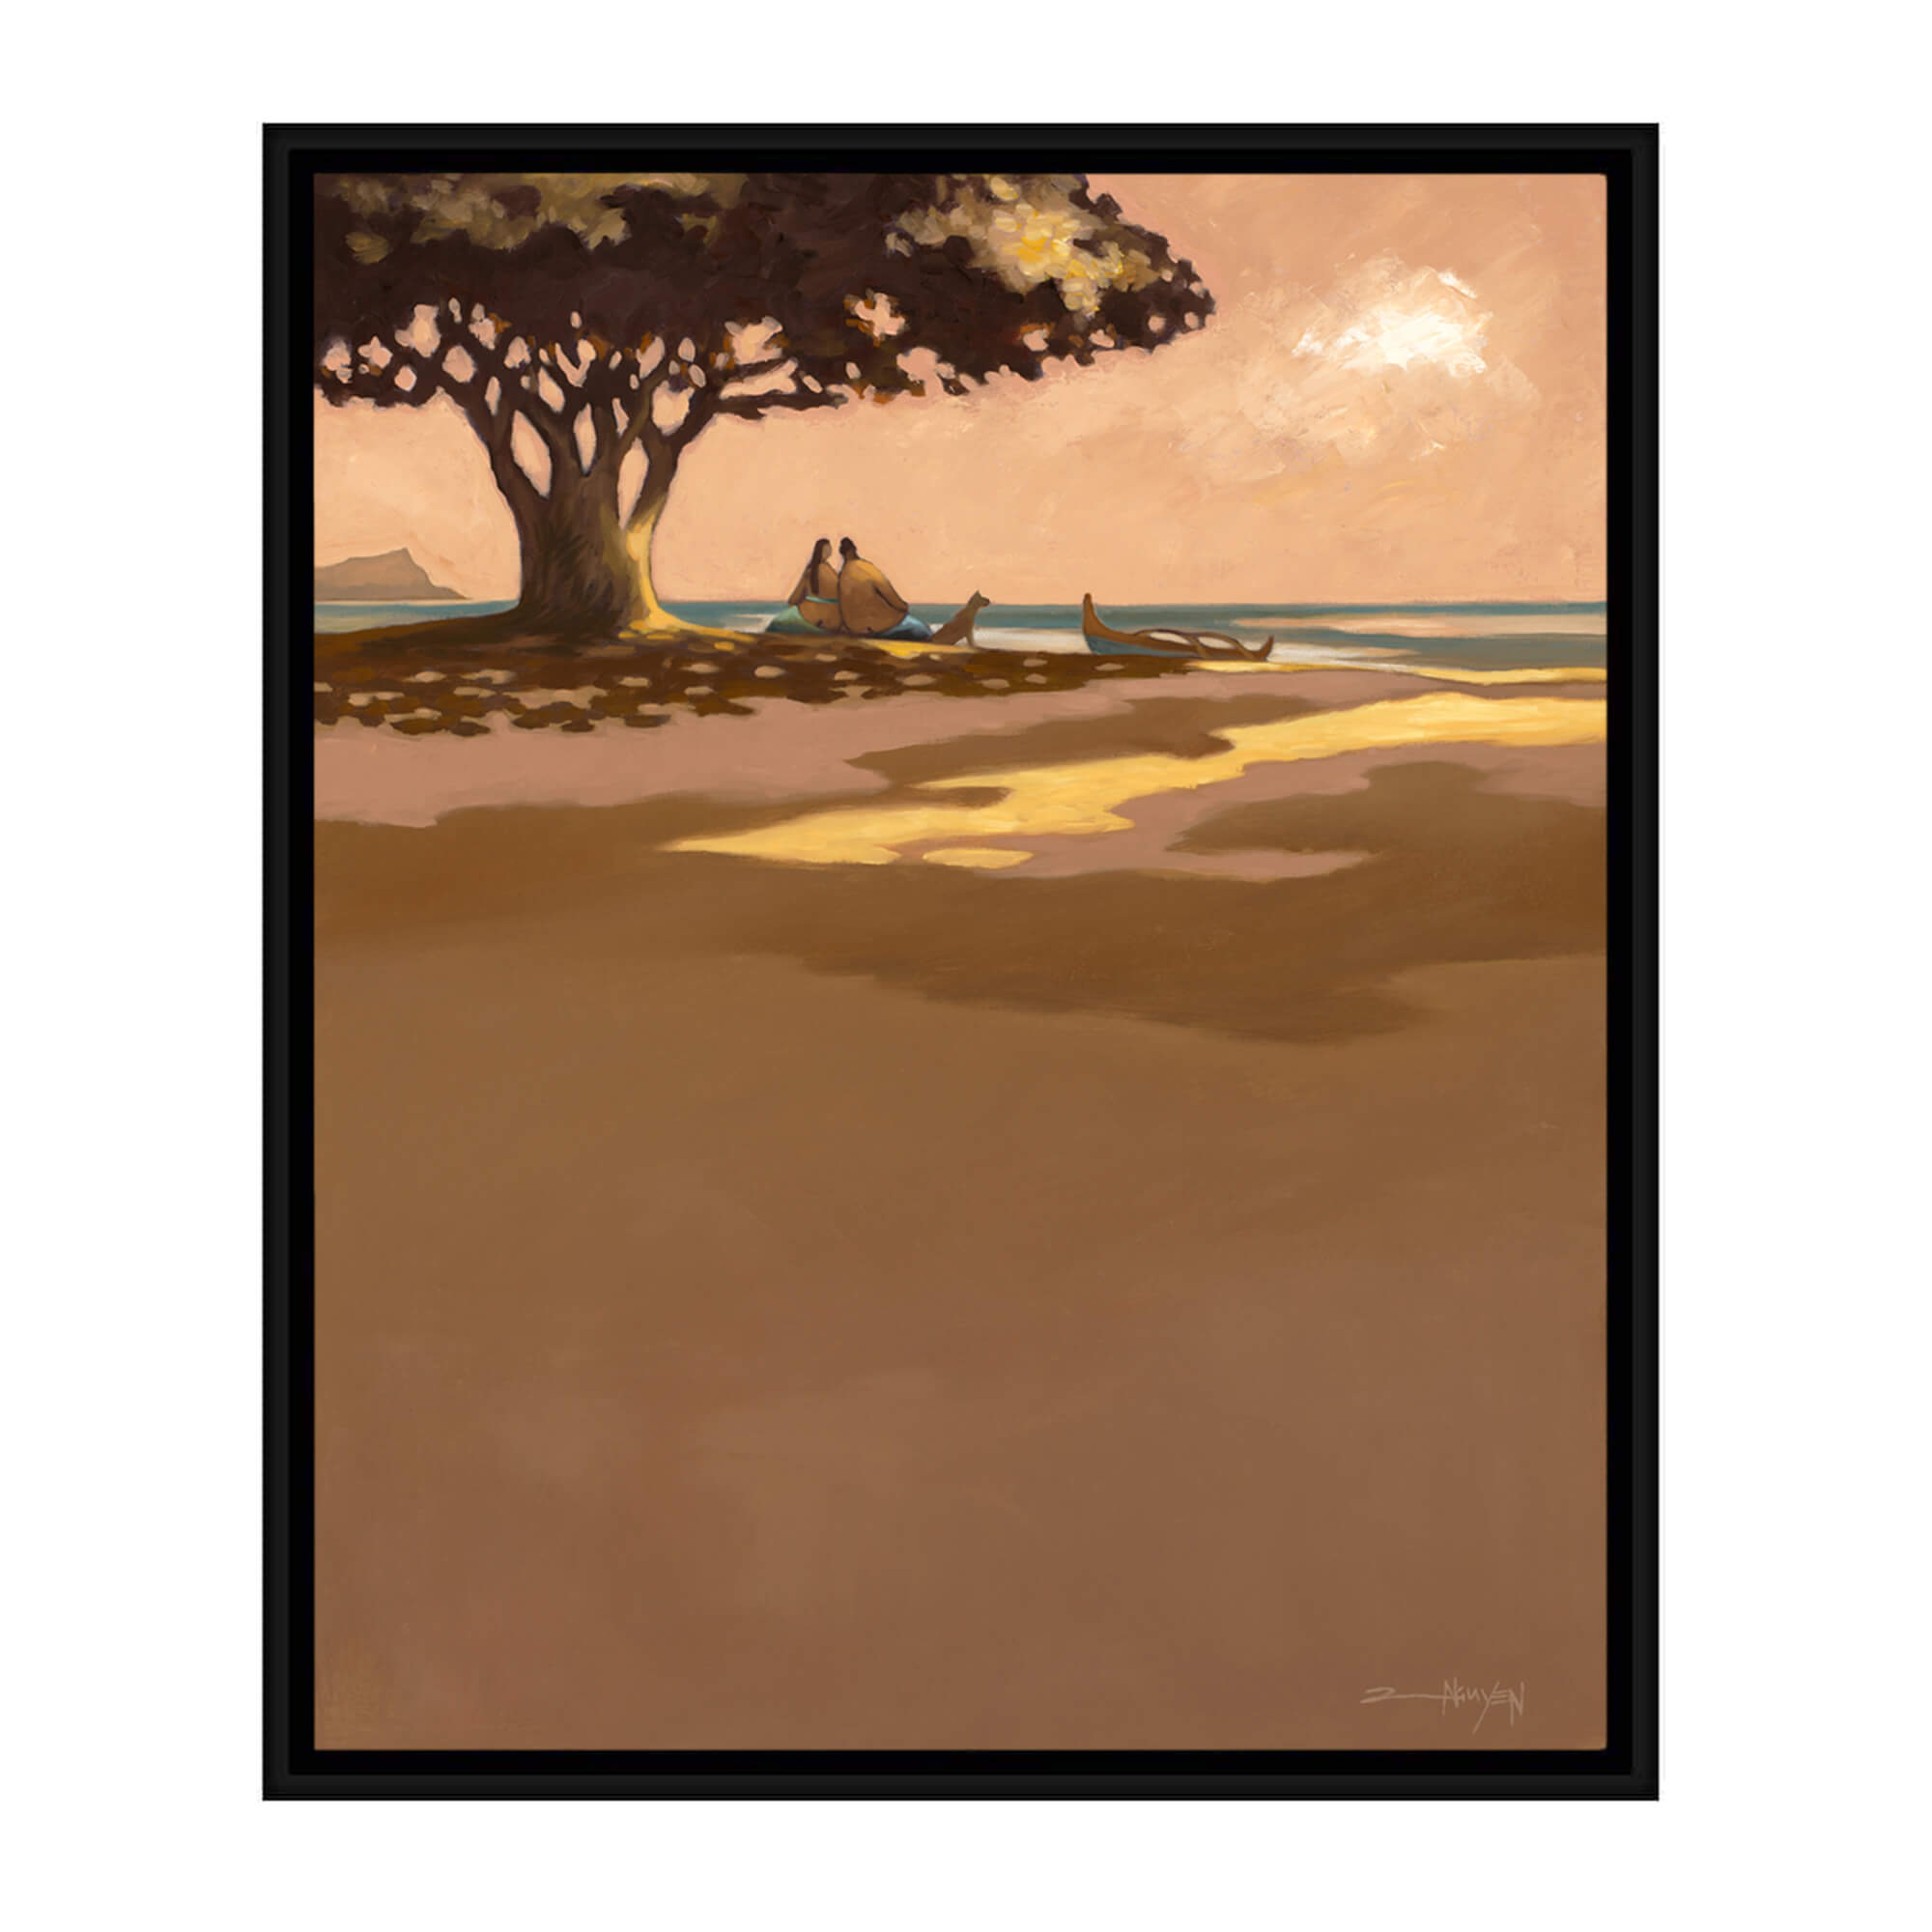 Framed canvas art print of a couple enjoying the sunset view by Hawaii artist Tim Nguyen